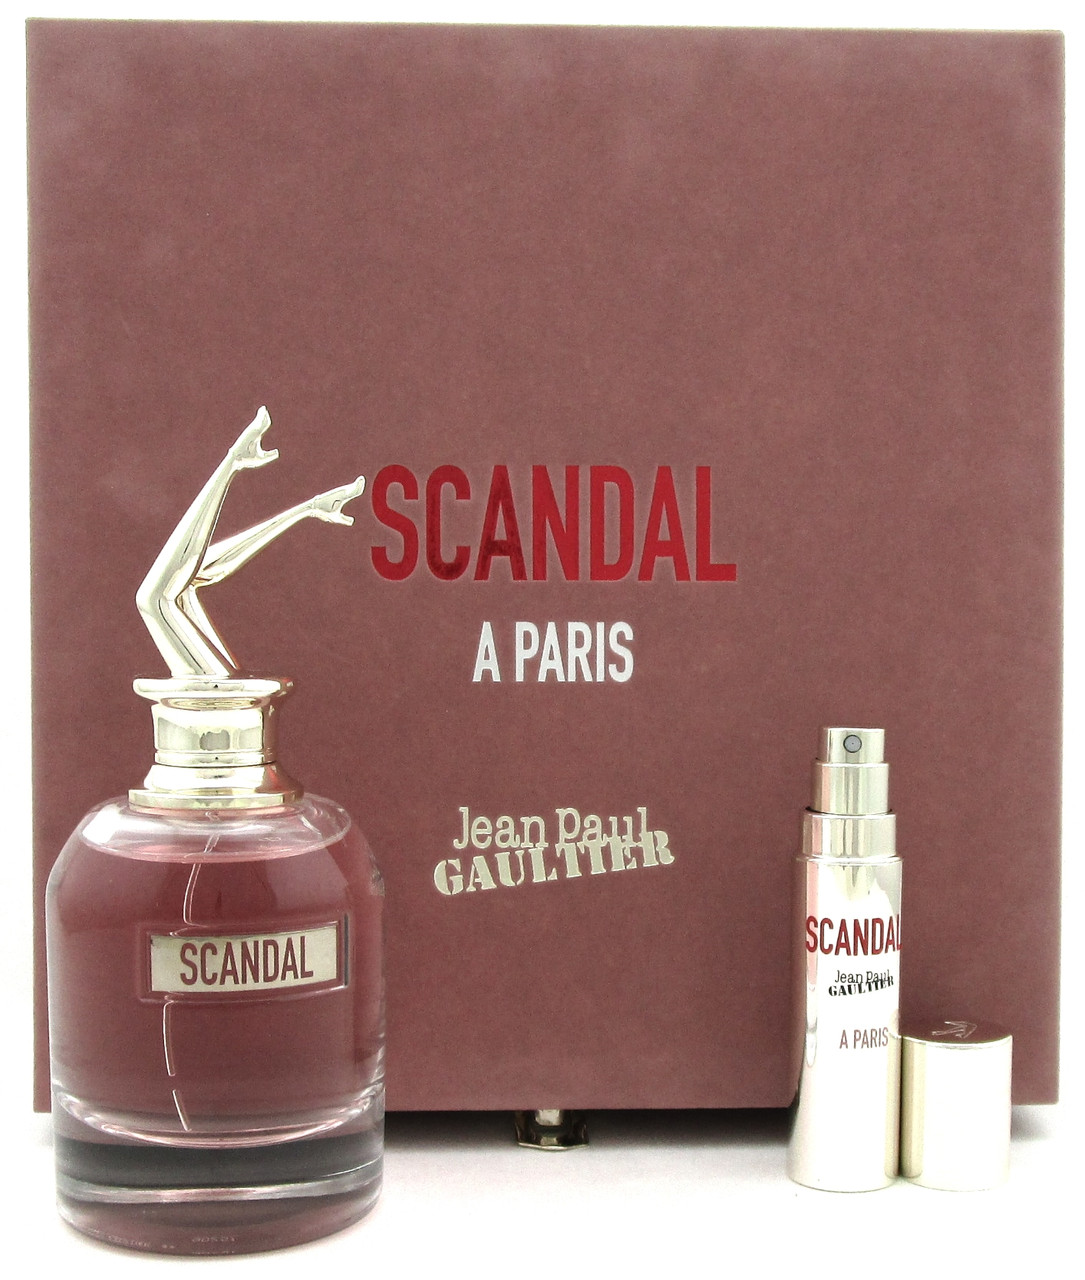 Jean Paul Gaultier SCANDAL A PARIS 2.7 oz.+10 ml. EDT Spray for Women. New SET. - NotJustPerfume.com